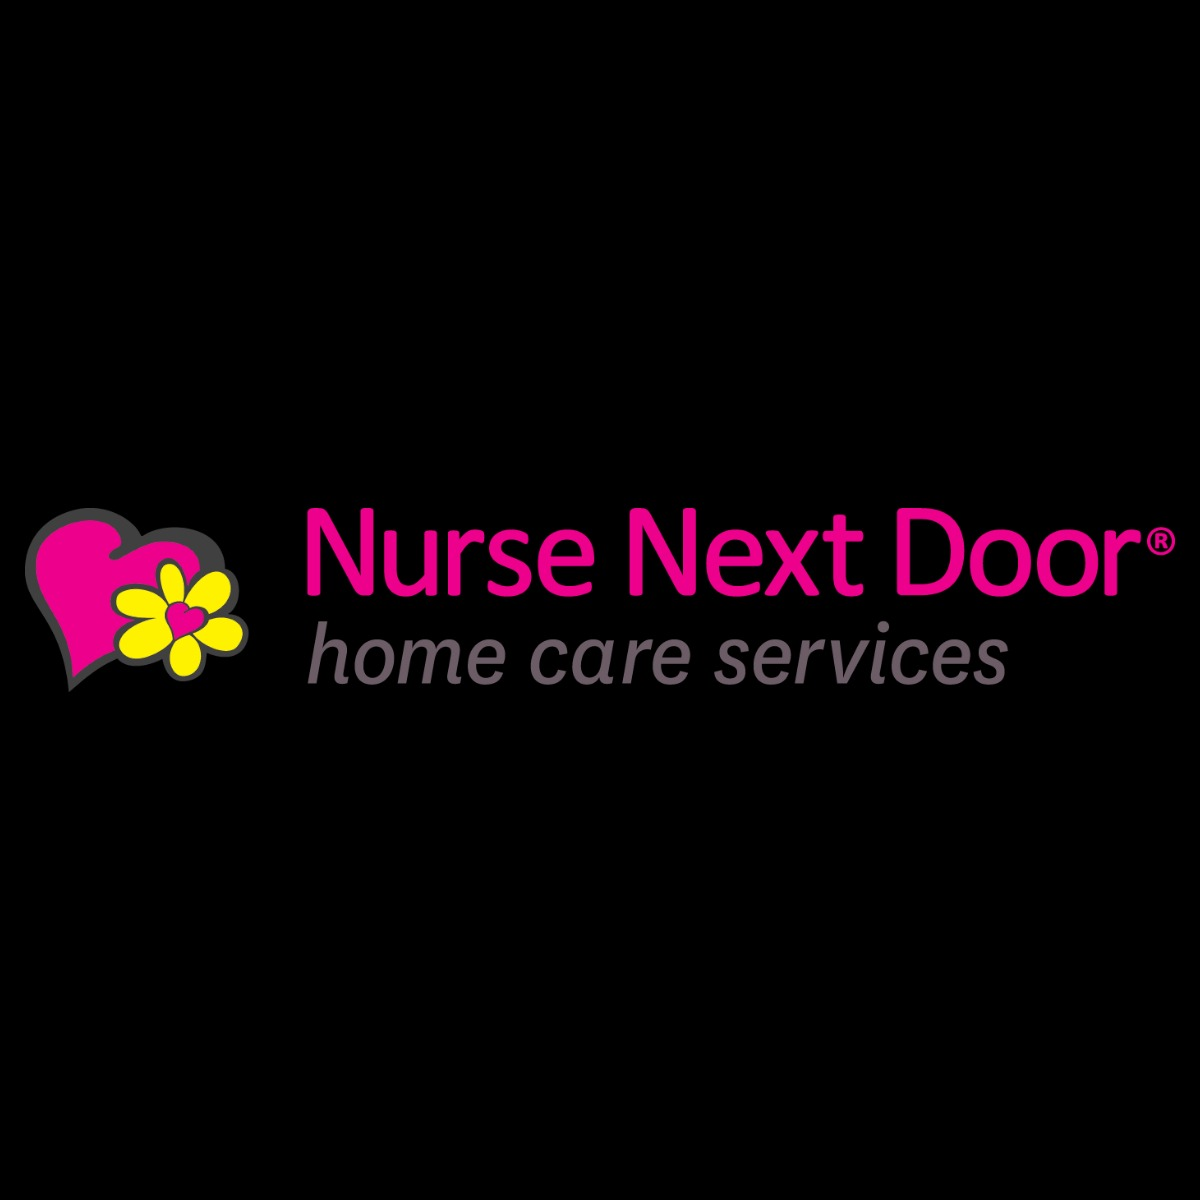 Nurse Next Door Home Care Services - Woodlands, Tx - Magnolia, TX 77355 - (713)429-0333 | ShowMeLocal.com